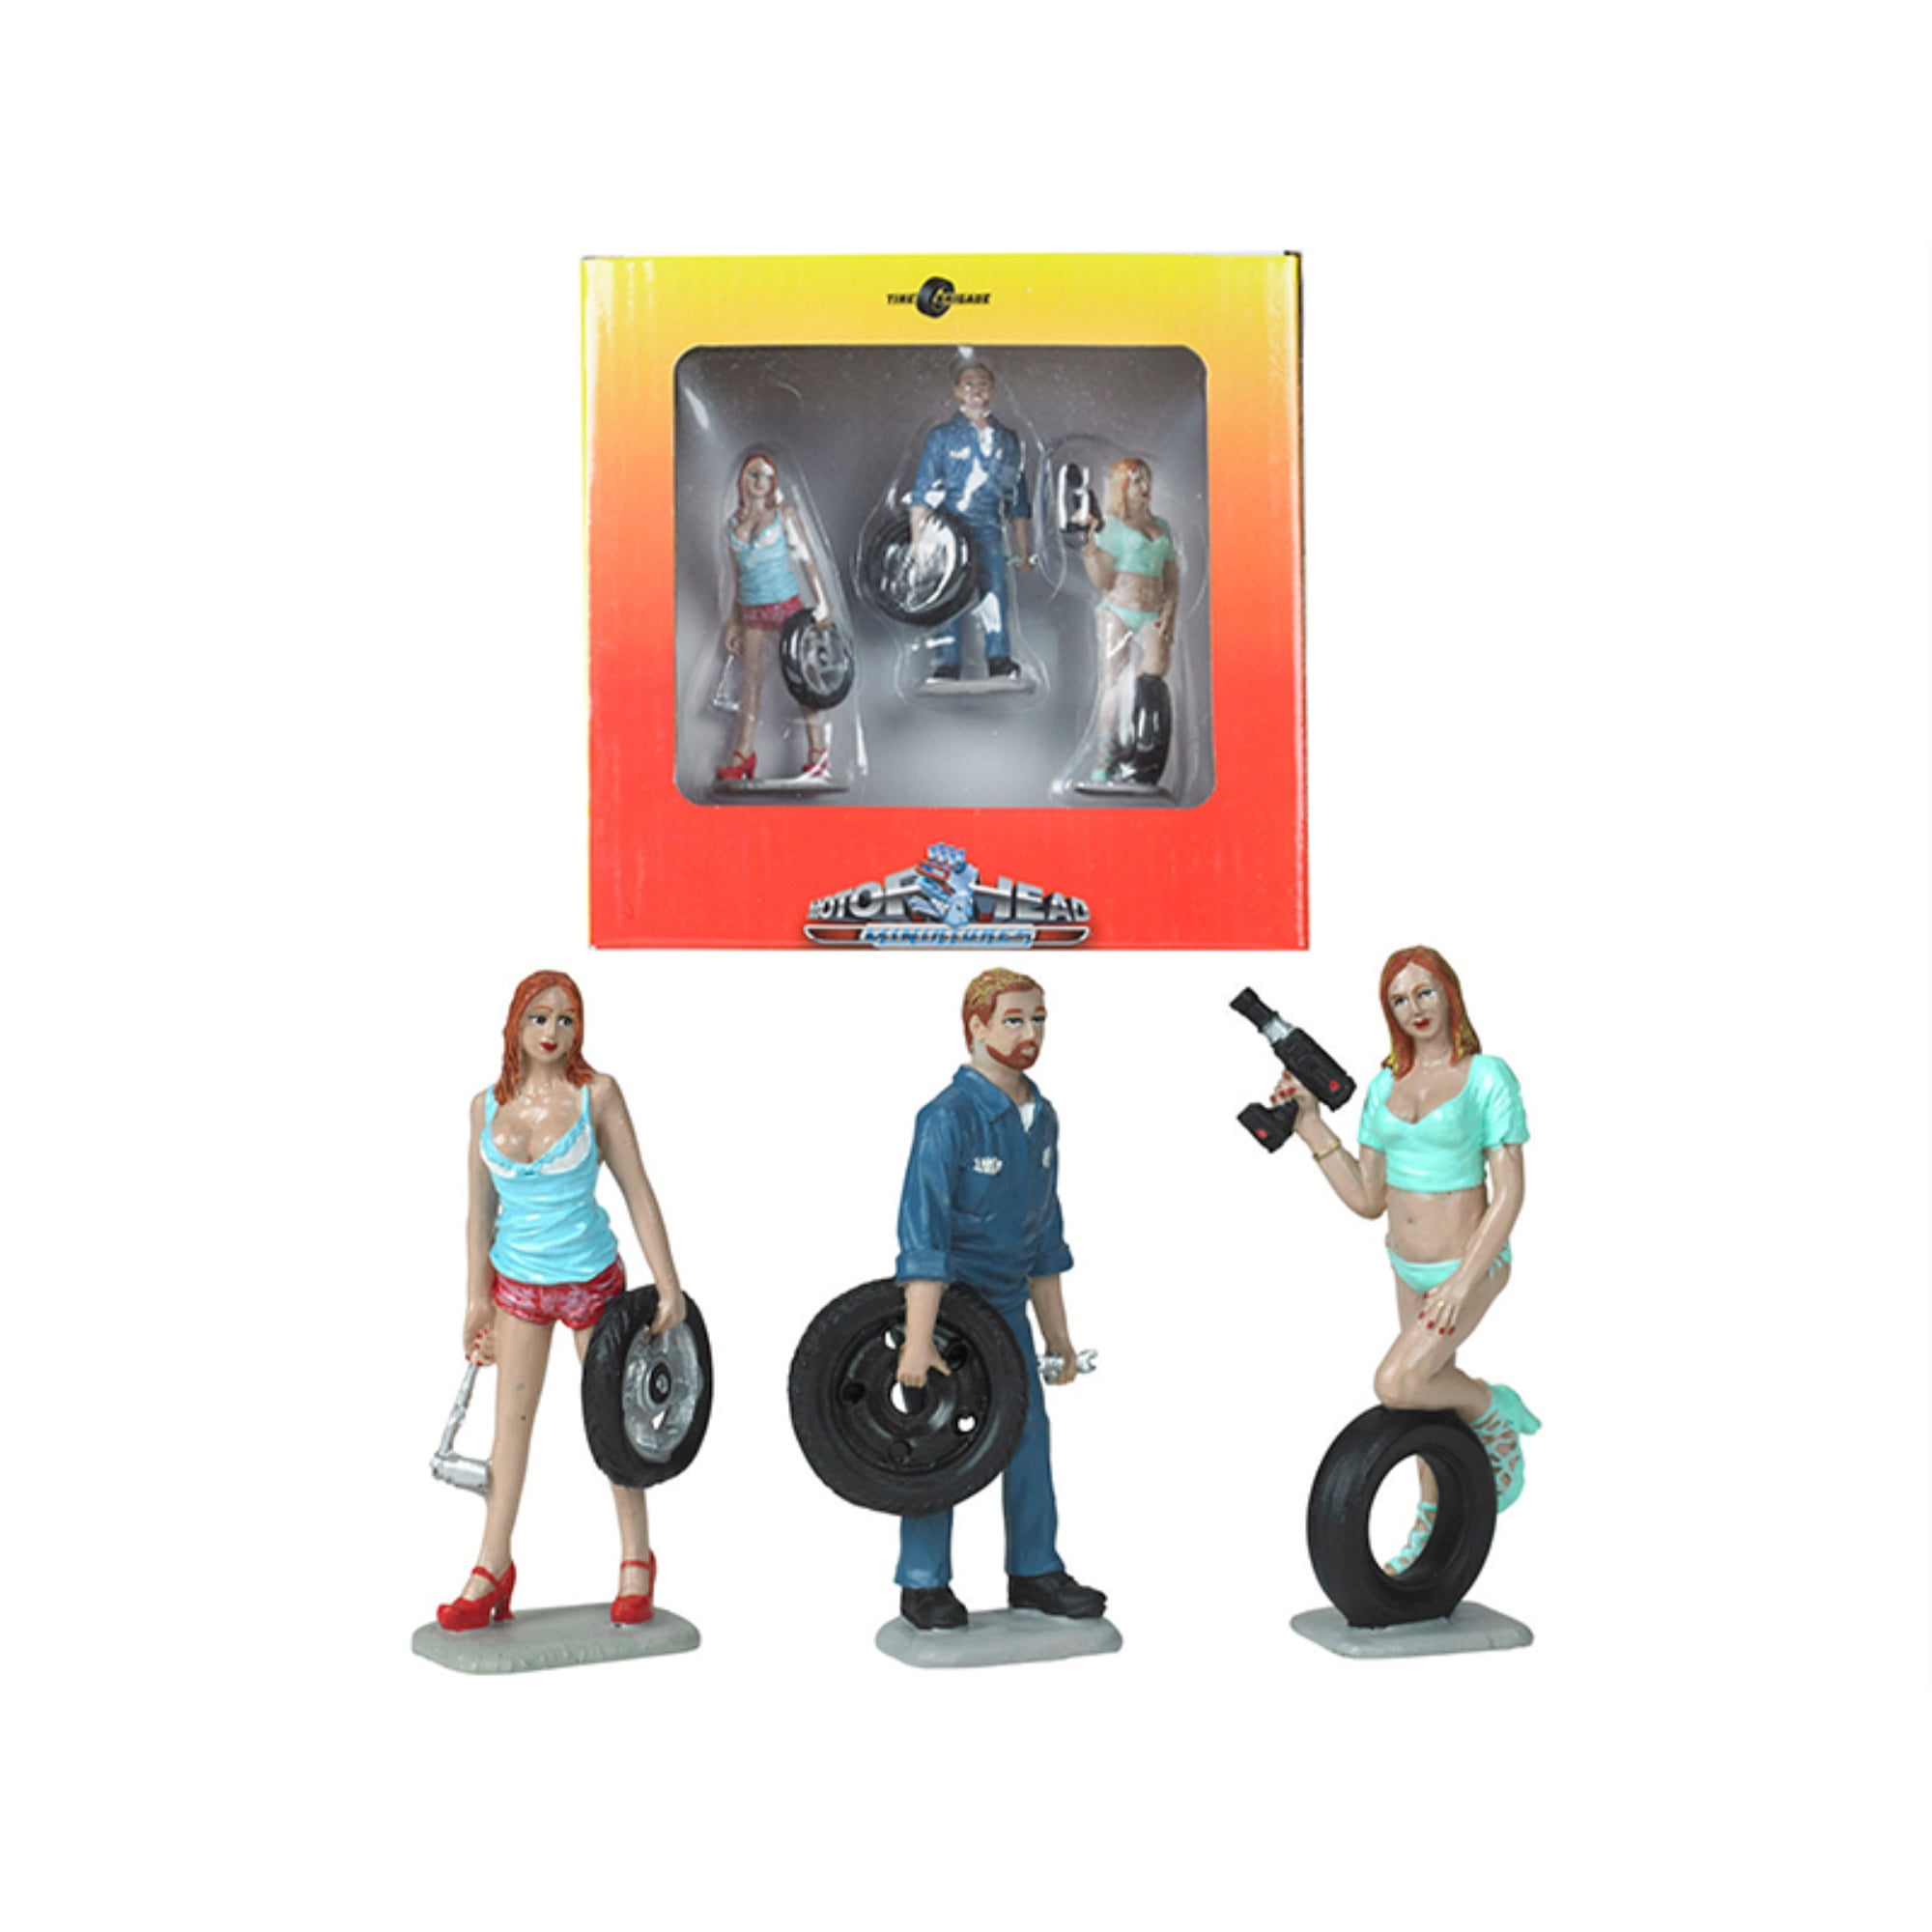 Mh775 3 In. 1-24 Scale Michelle, Meg & Gary Tire Brigade Figurine Set - 3 Piece